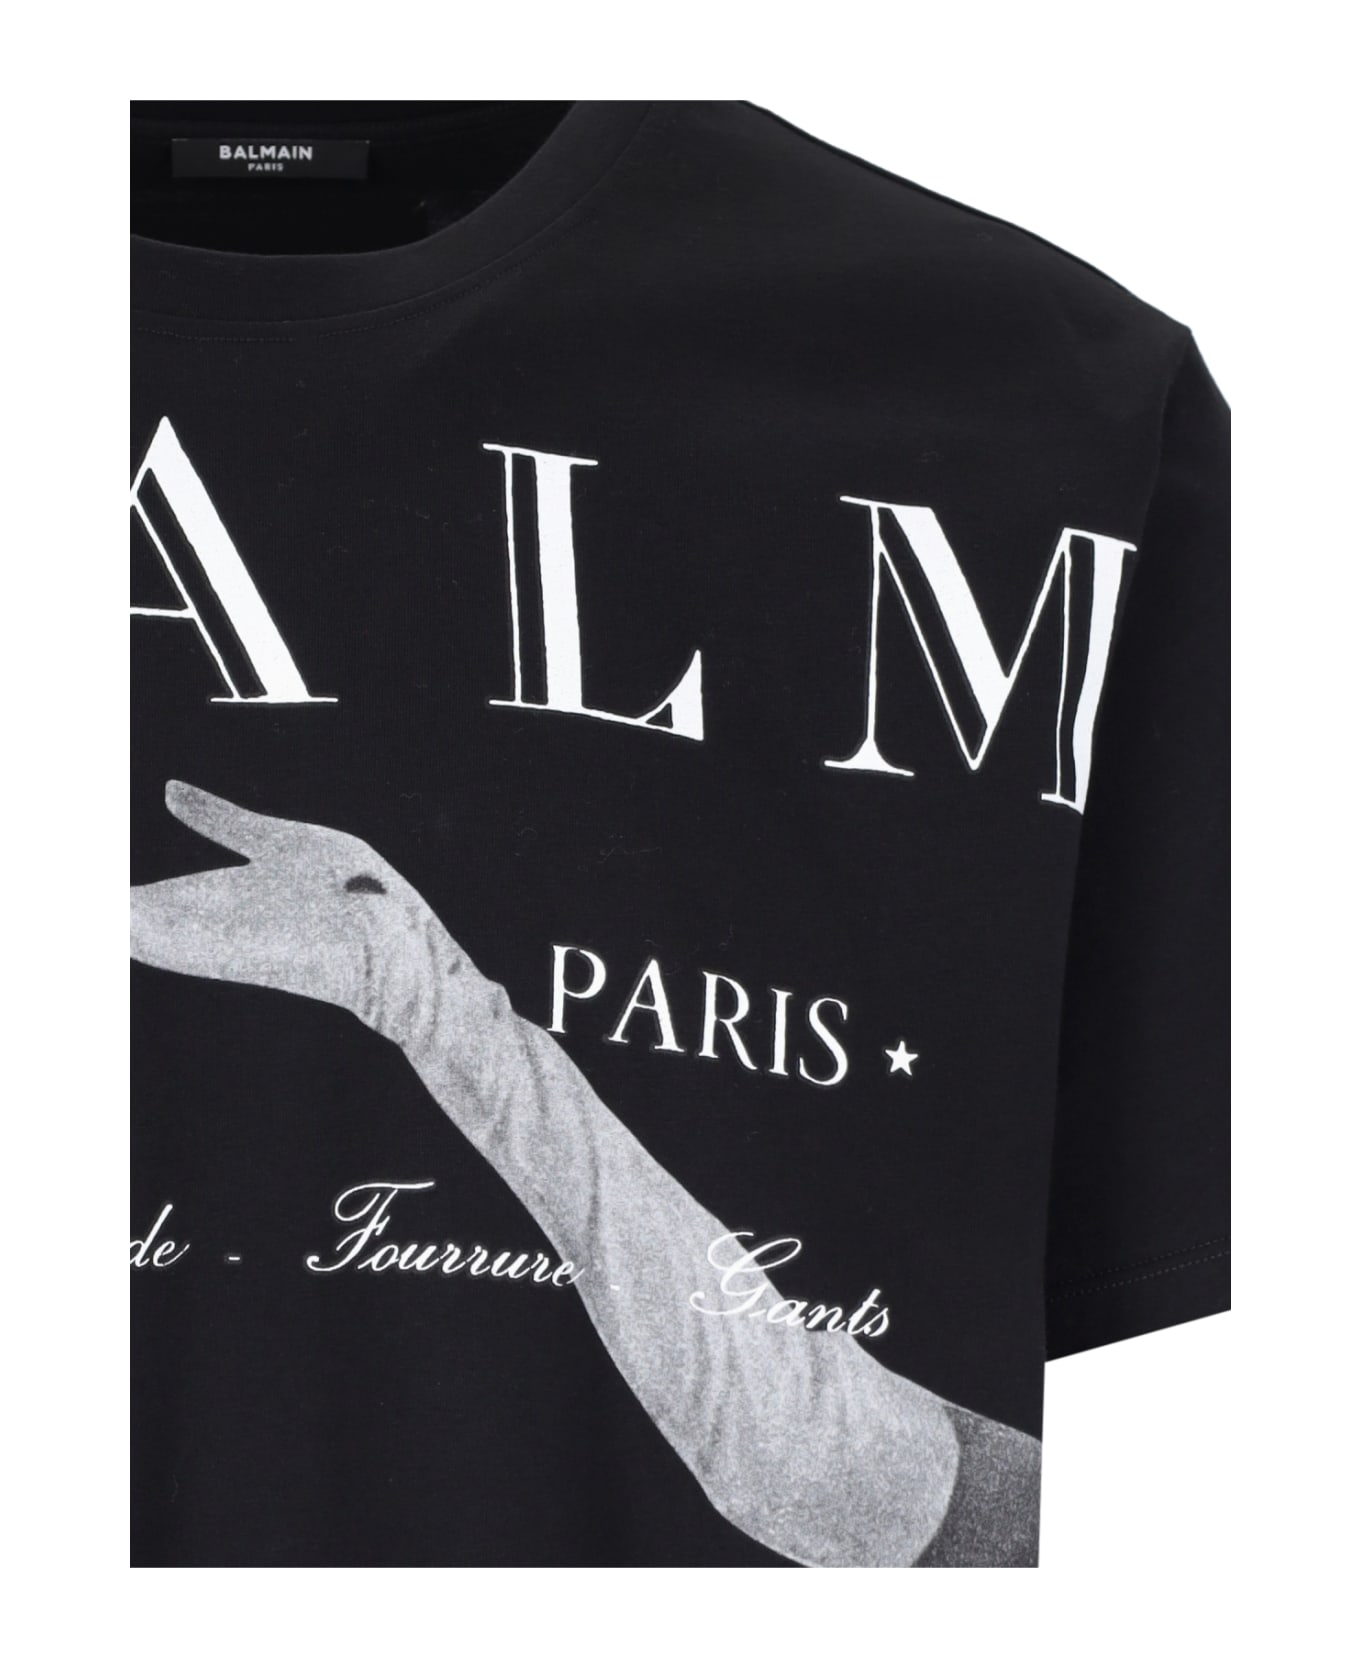 Balmain Printed T-shirt - Noir/multi gris シャツ